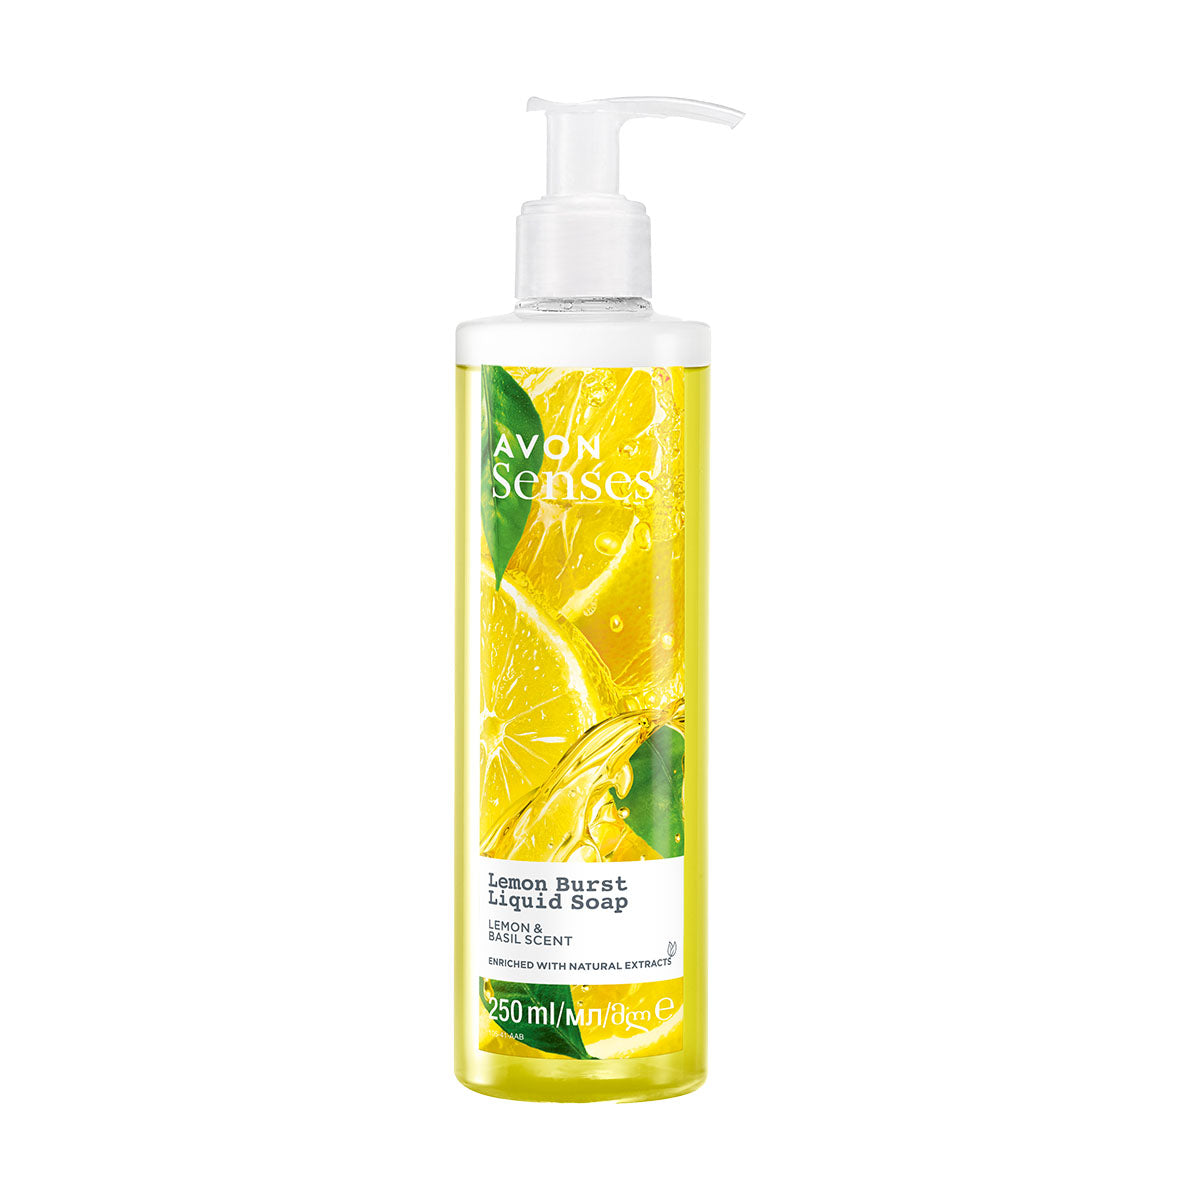 Avon Senses Lemon Burst Liquid Soap